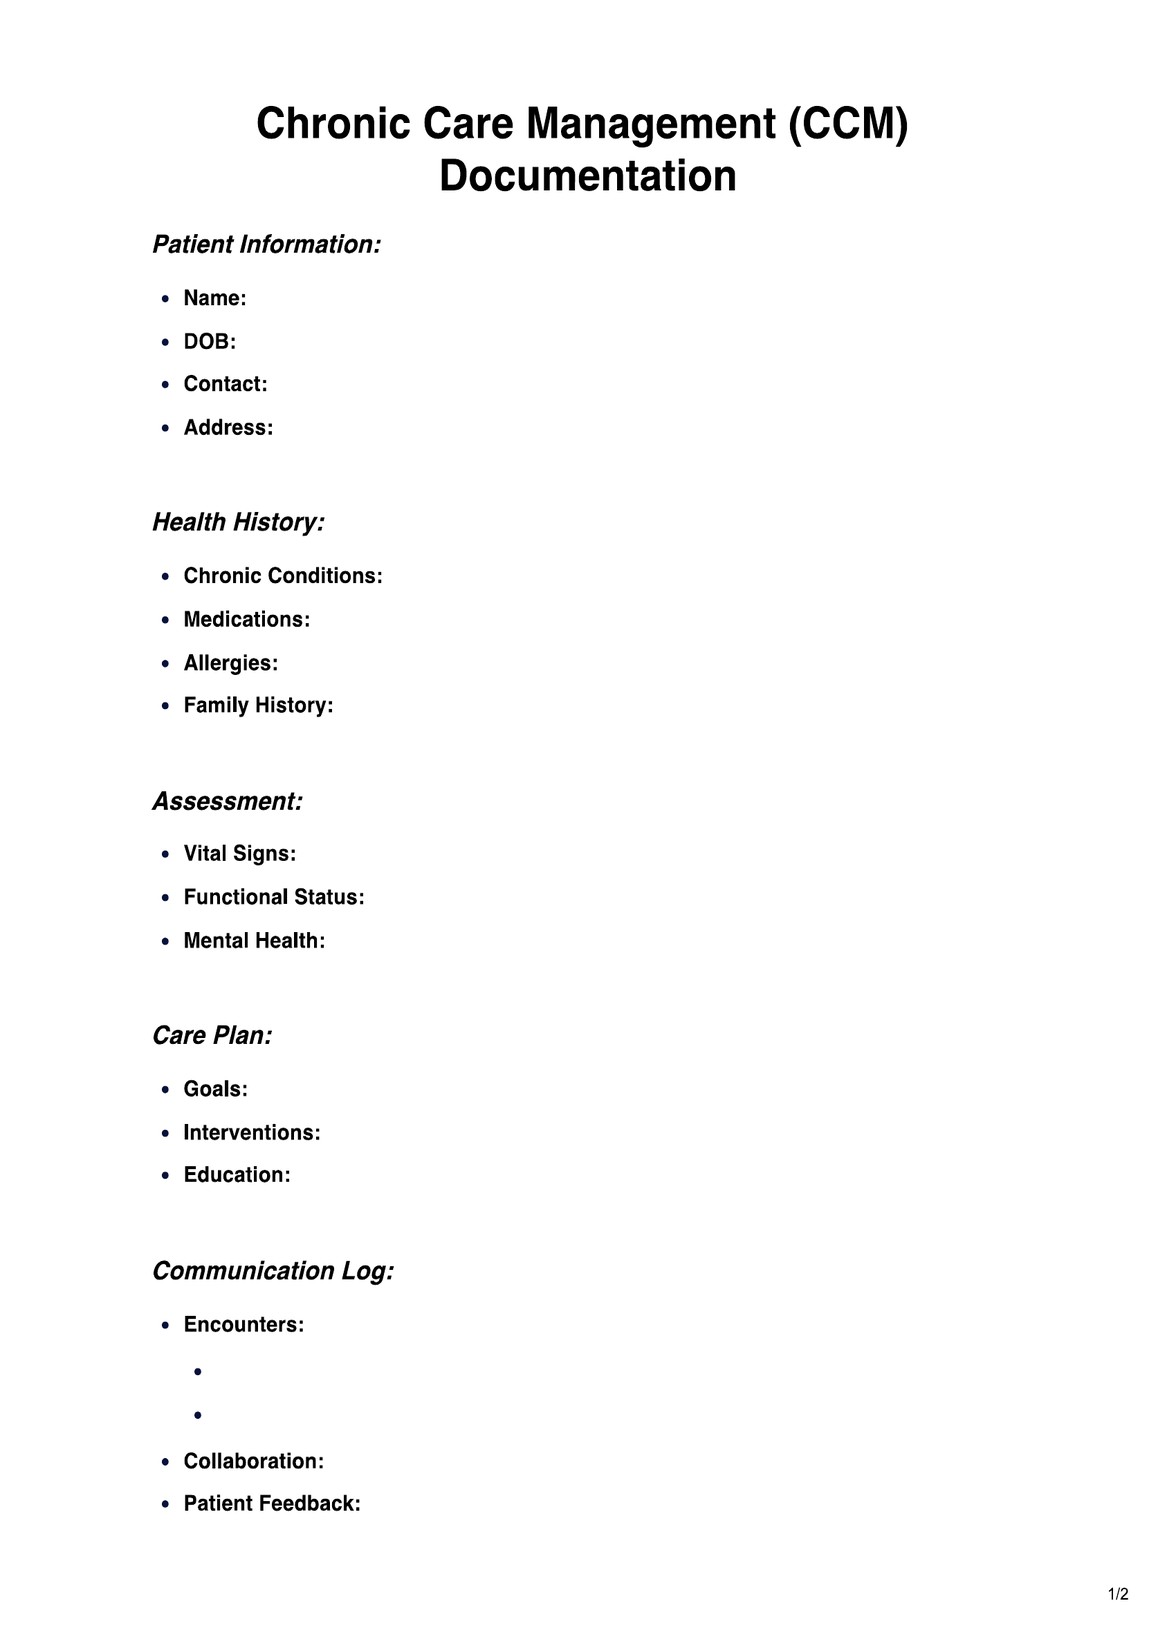 CCM Documentation PDF Example